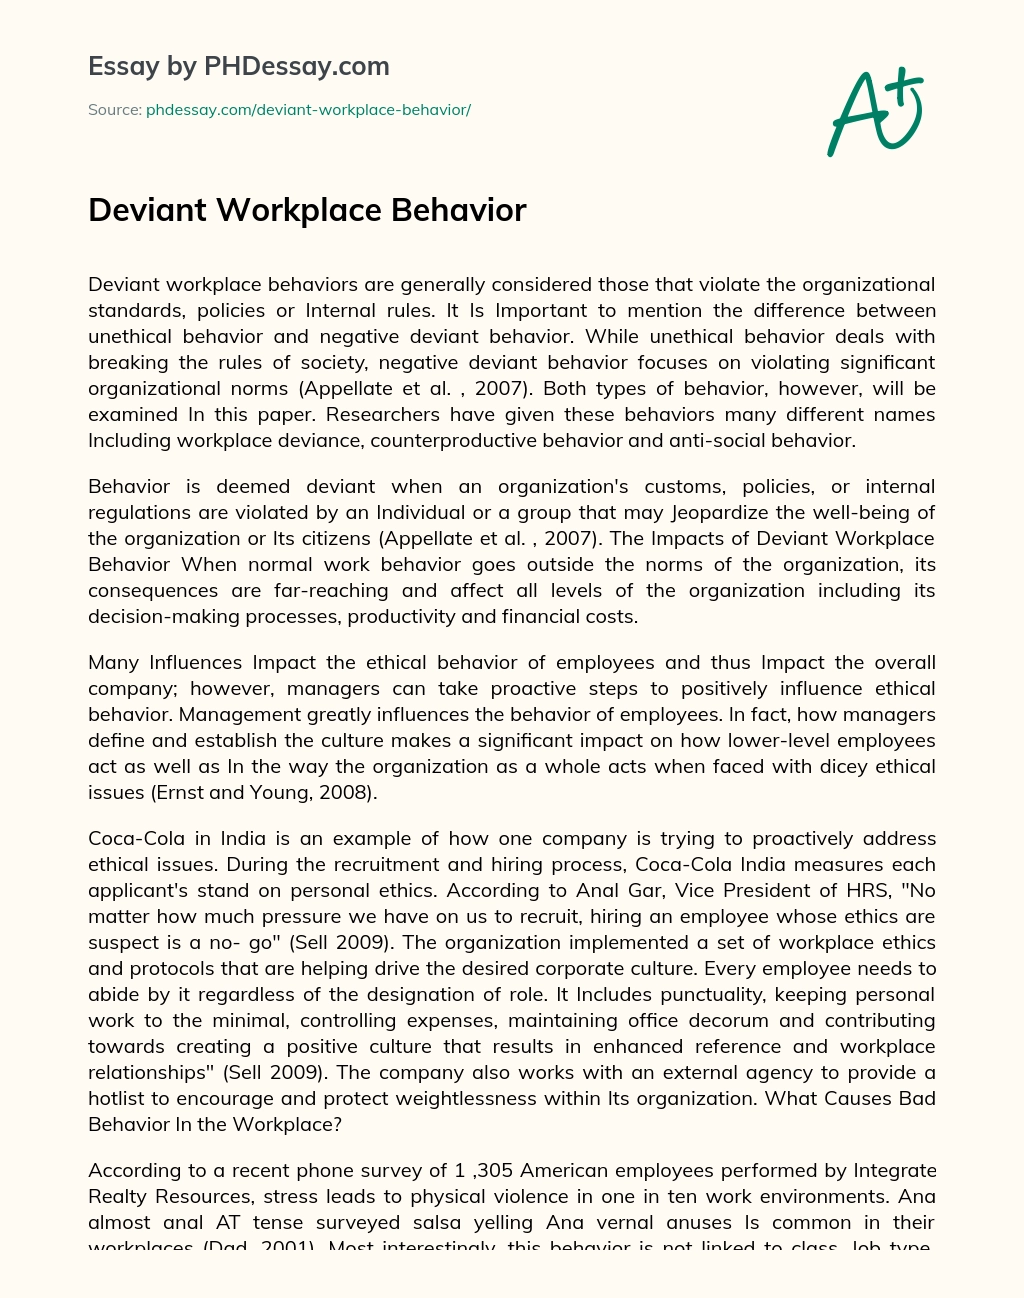 Deviant Workplace Behavior essay